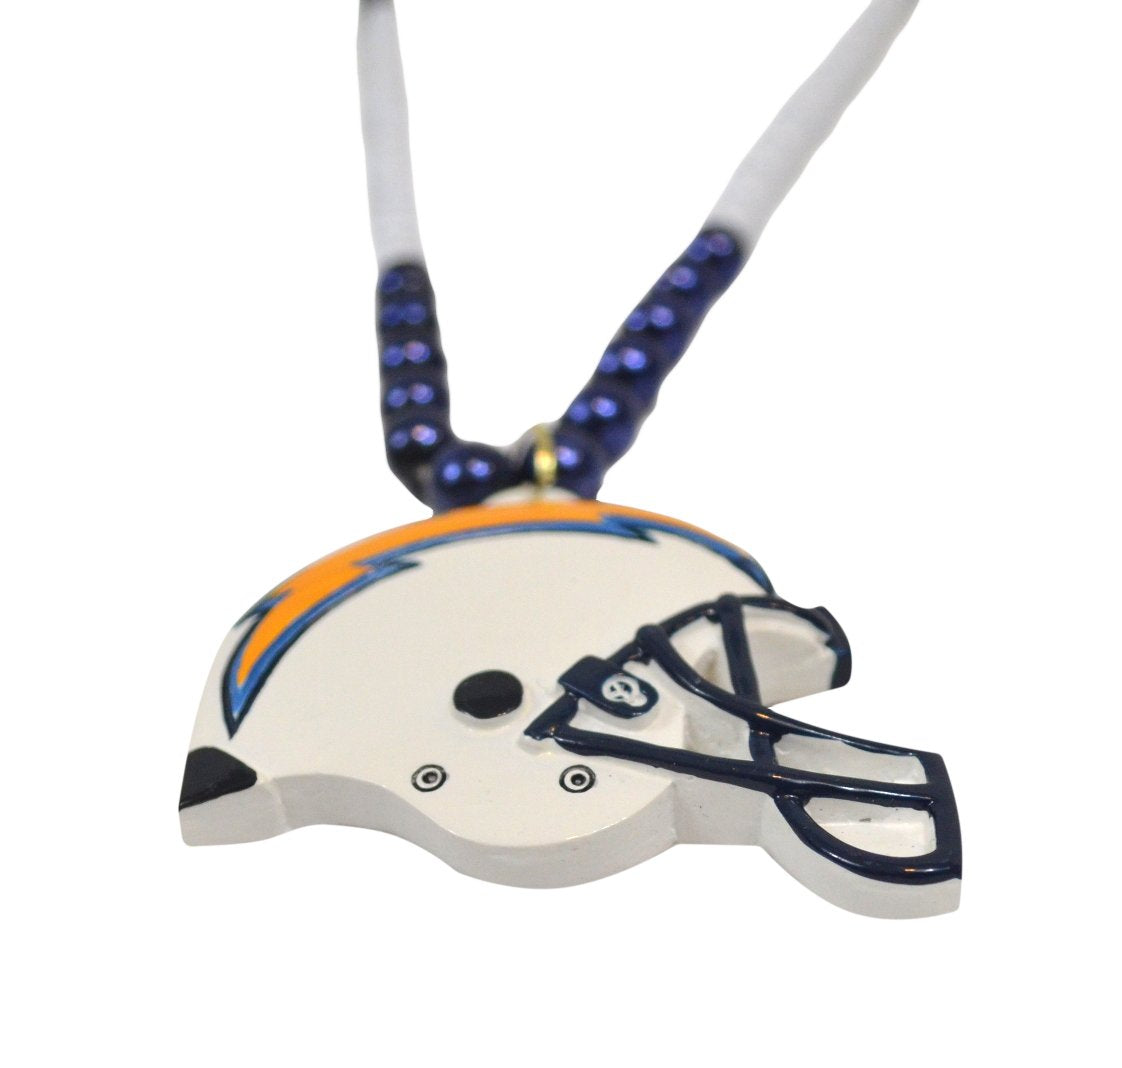 ETON Sporting GoodsInc Official National Football League Fan Shop Authentic NFL Team Party Mardi Gras Custom Tailgate Beads 2-Pack